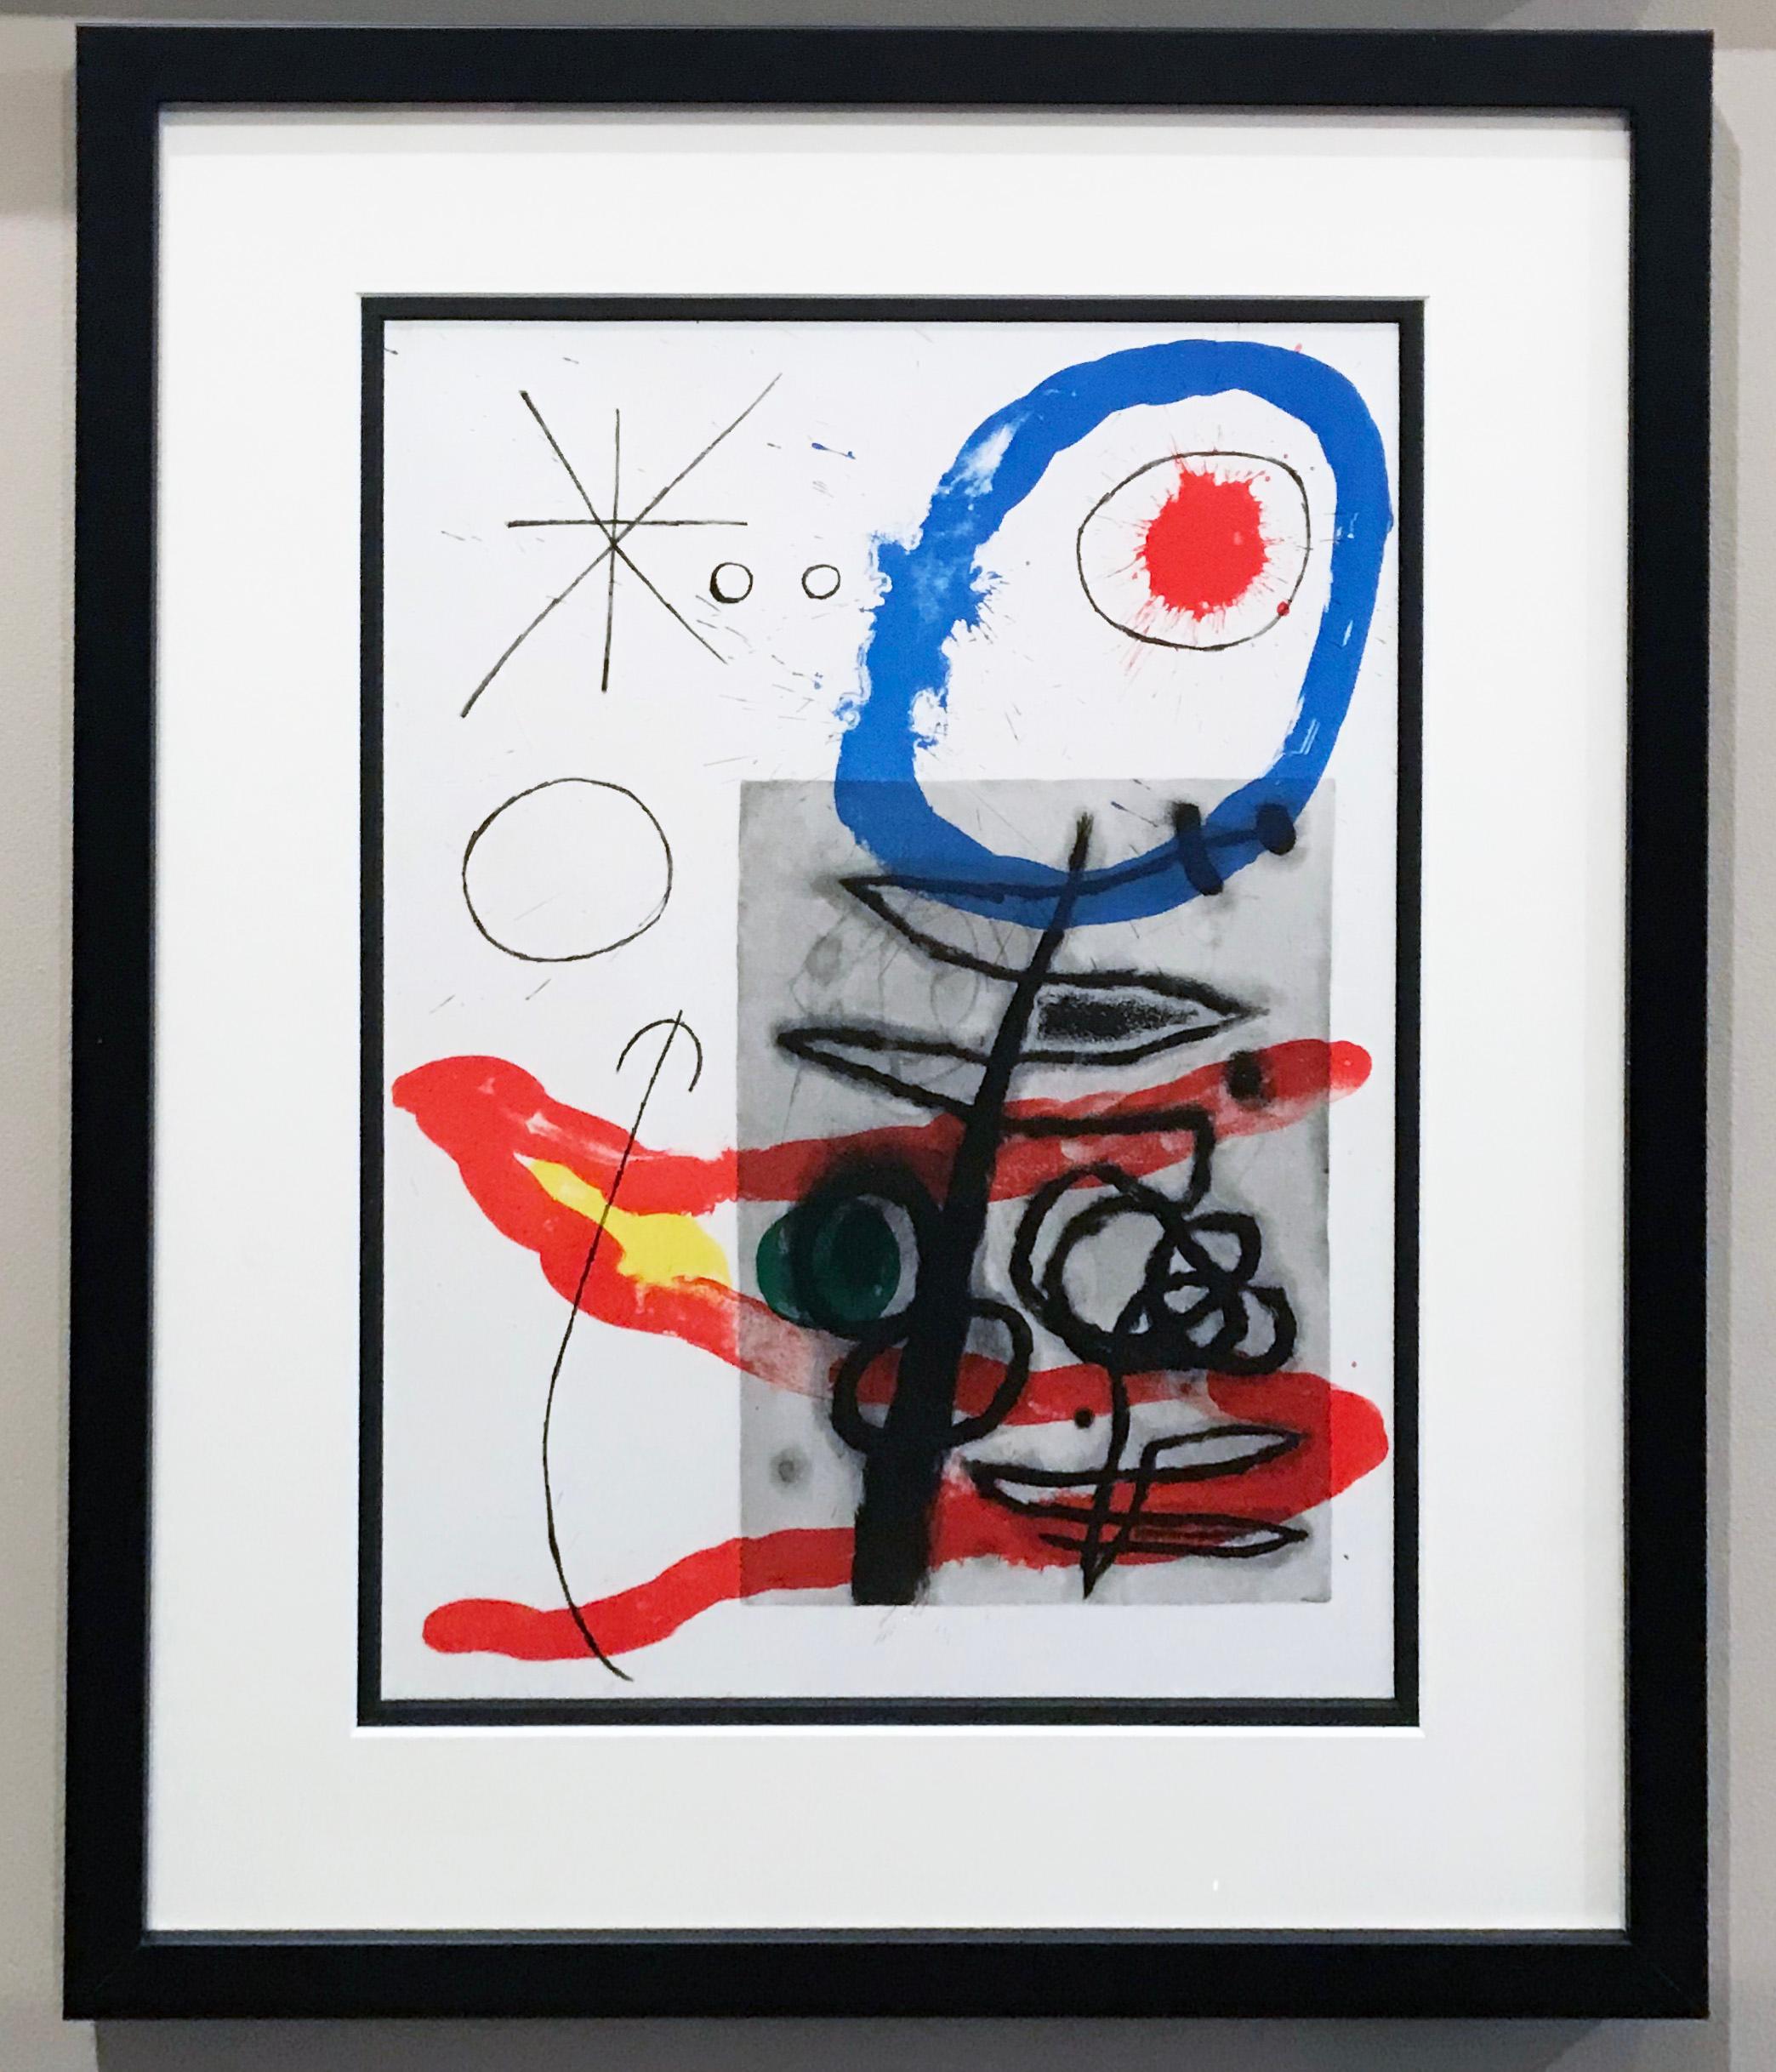 Plate 16, from 1965 Peintures sur Cartons - Print by Joan Miró